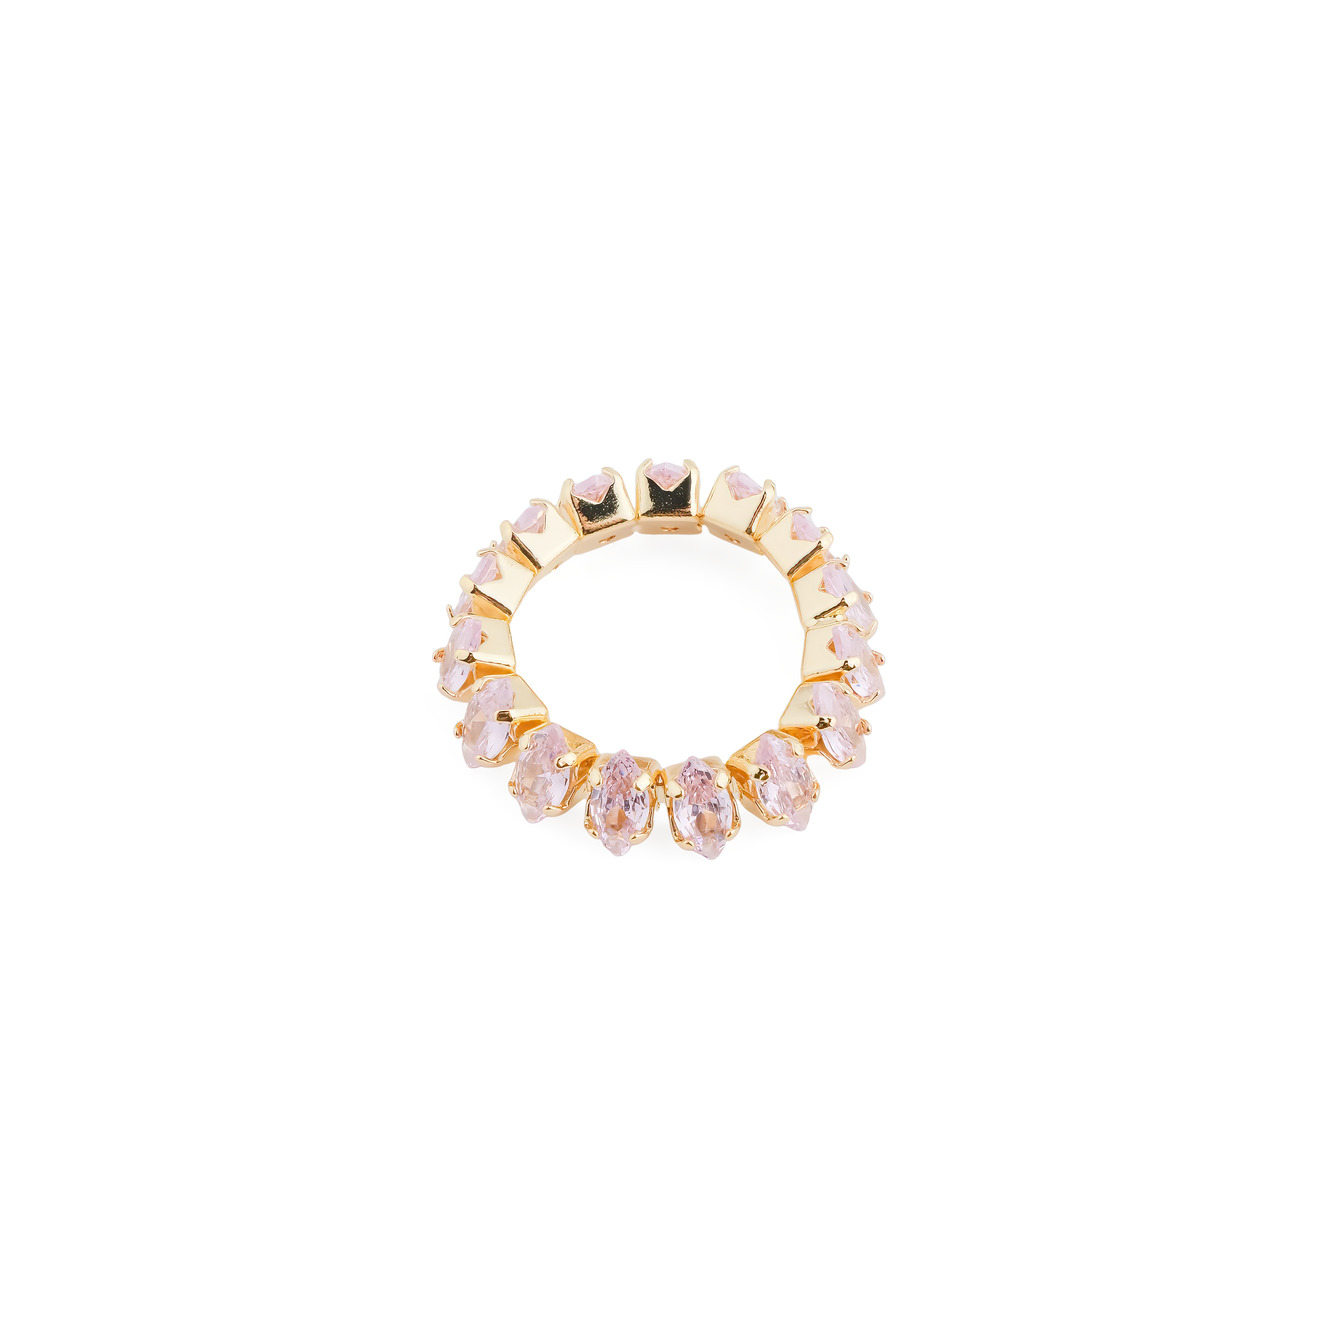 Herald Percy Кольцо с розовыми кристаллами herald percy серебристое кольцо из сердец с белыми и розовыми кристаллами